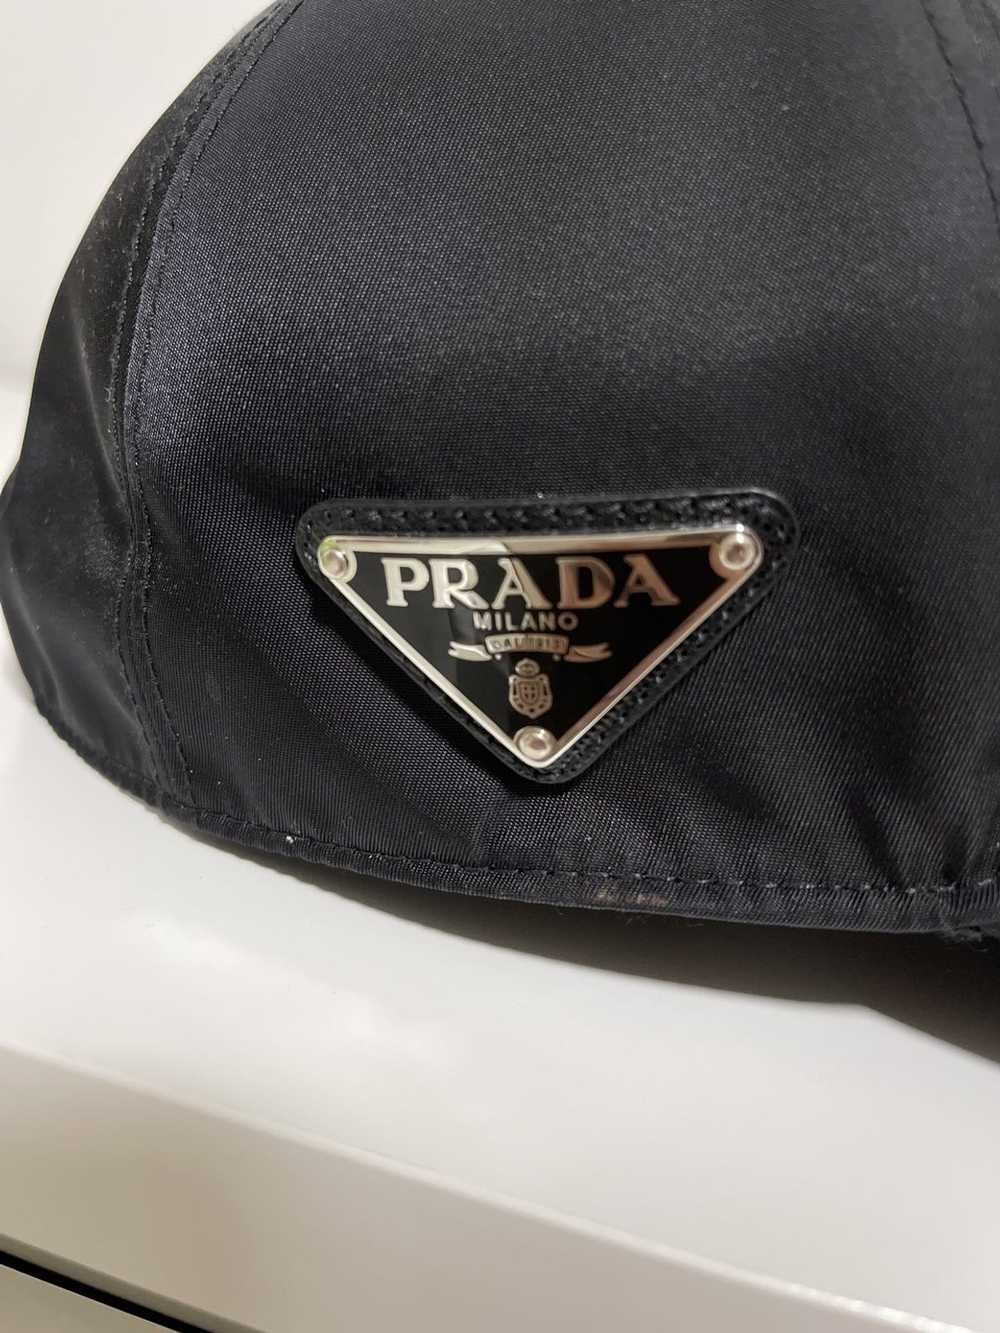 Prada Prada Re-Nylon hat - image 4